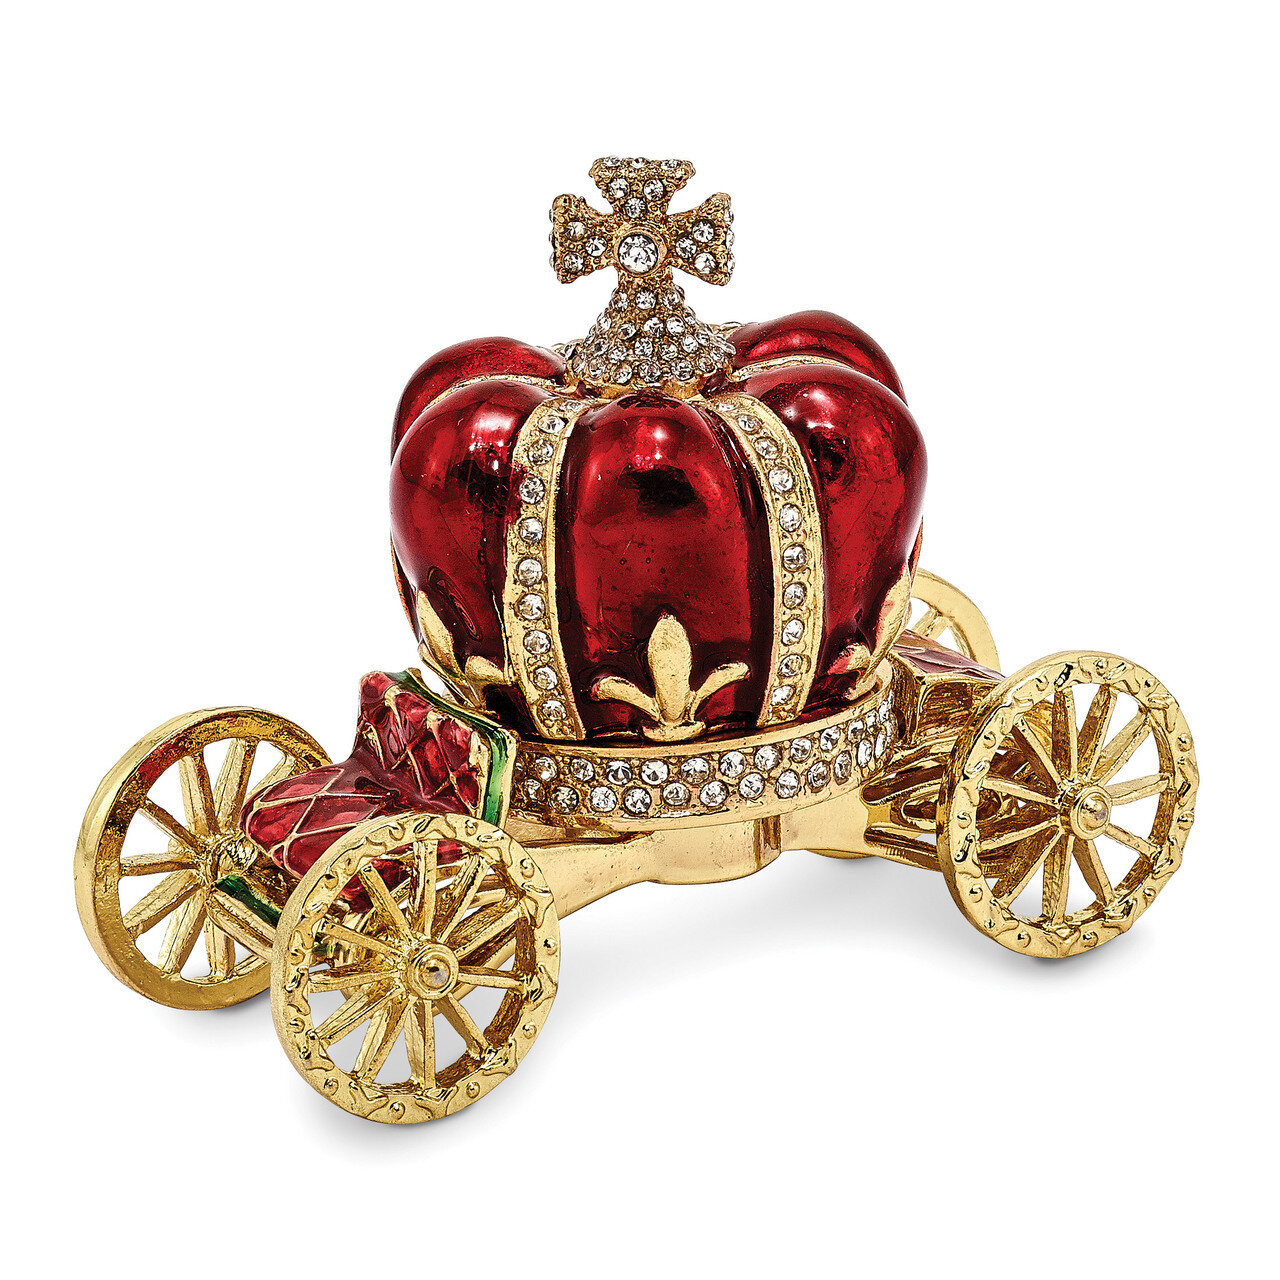 Her Majesty's Carriage Trinket Box Enamel on Pewter by Jere